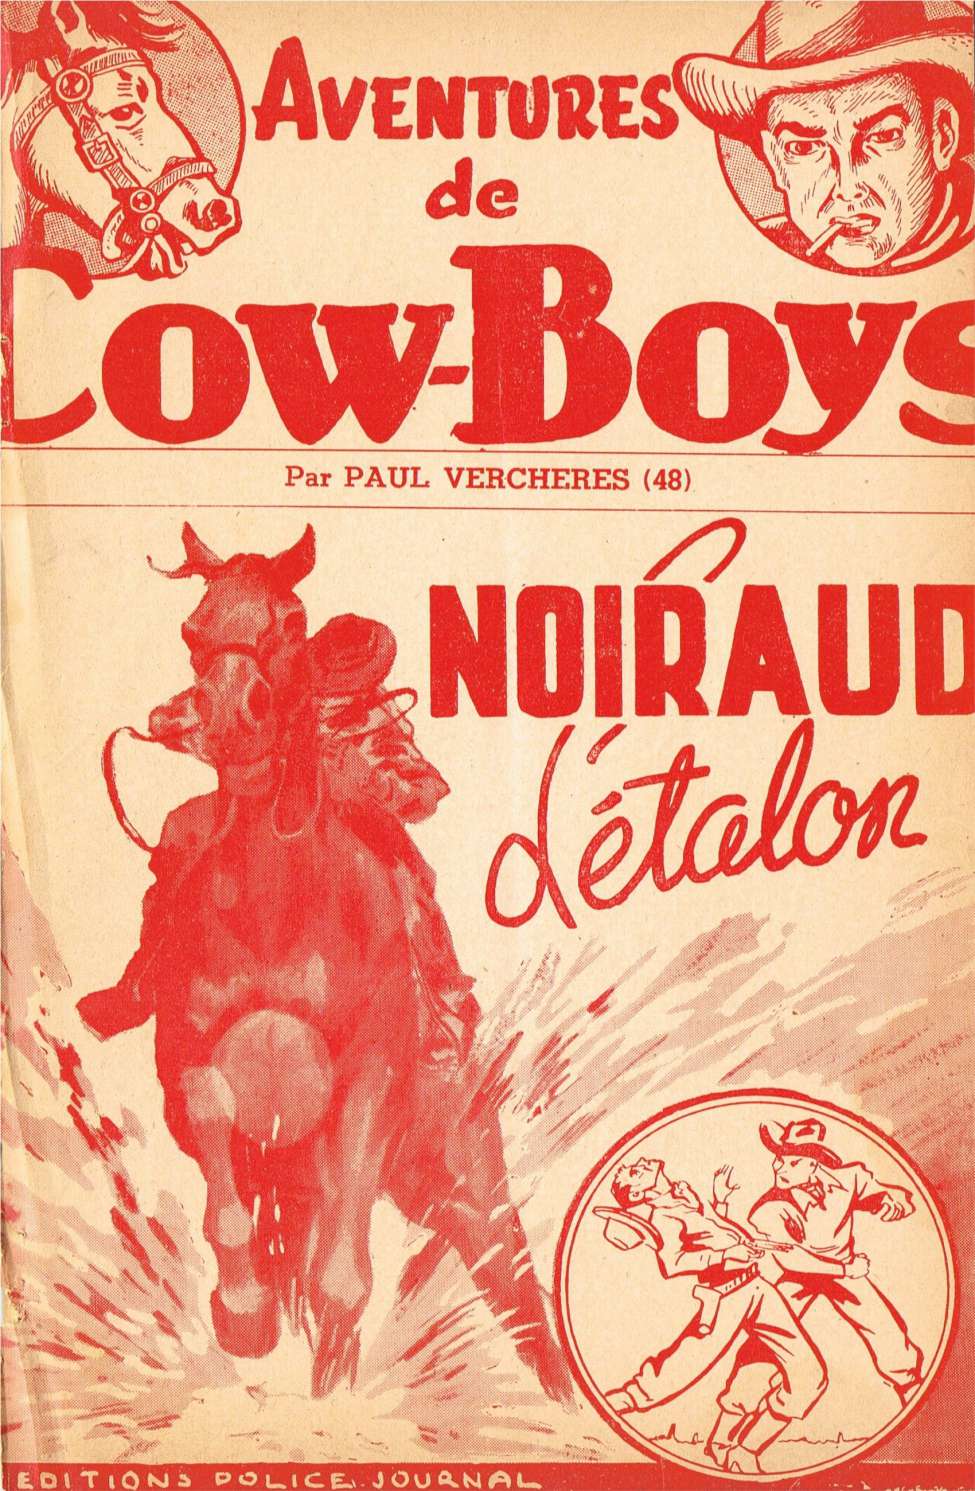 Book Cover For Aventures de Cow-Boys 48 - Noiraud L'étalon